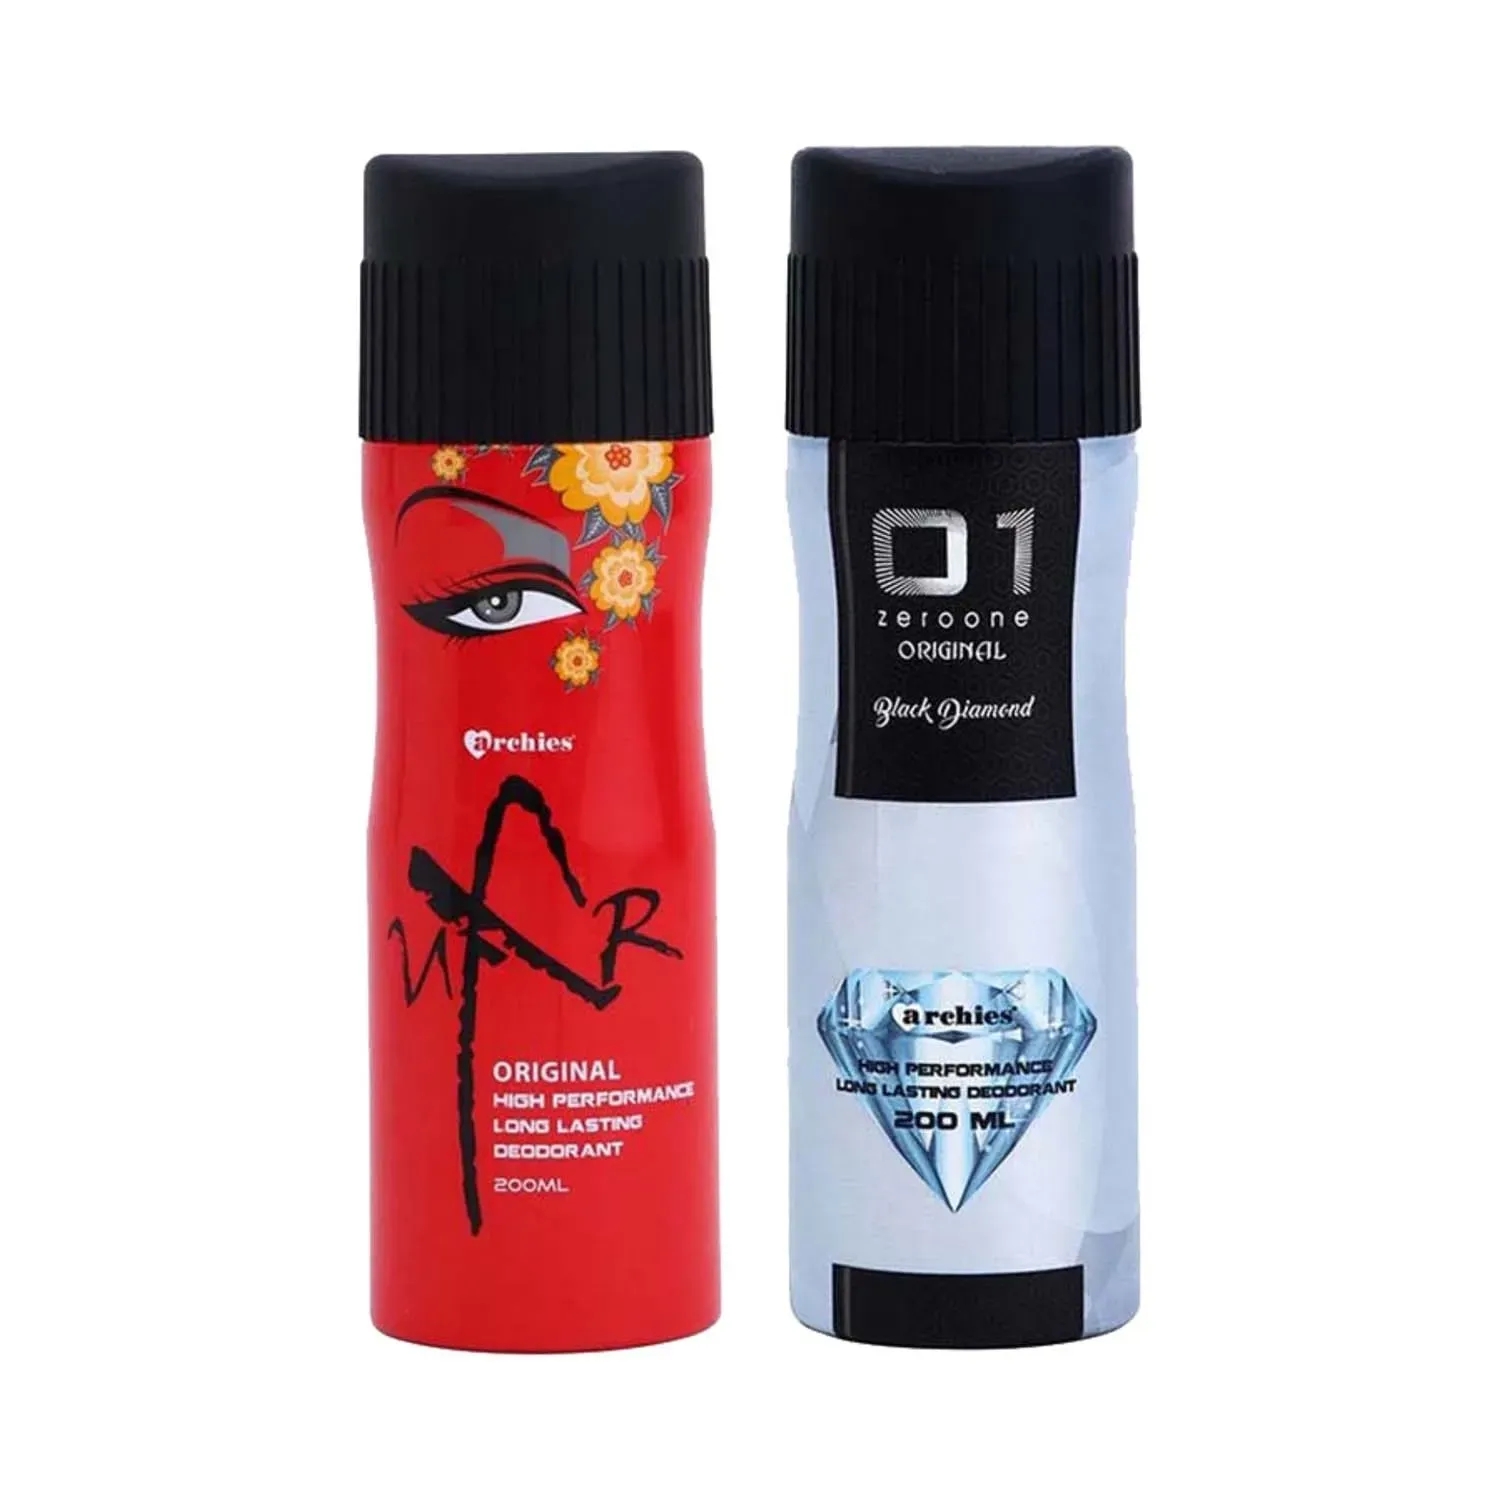 Archies Parfum | Archies Parfum UXR and 01 Black Diamond Deodorant Combo (2Pcs)